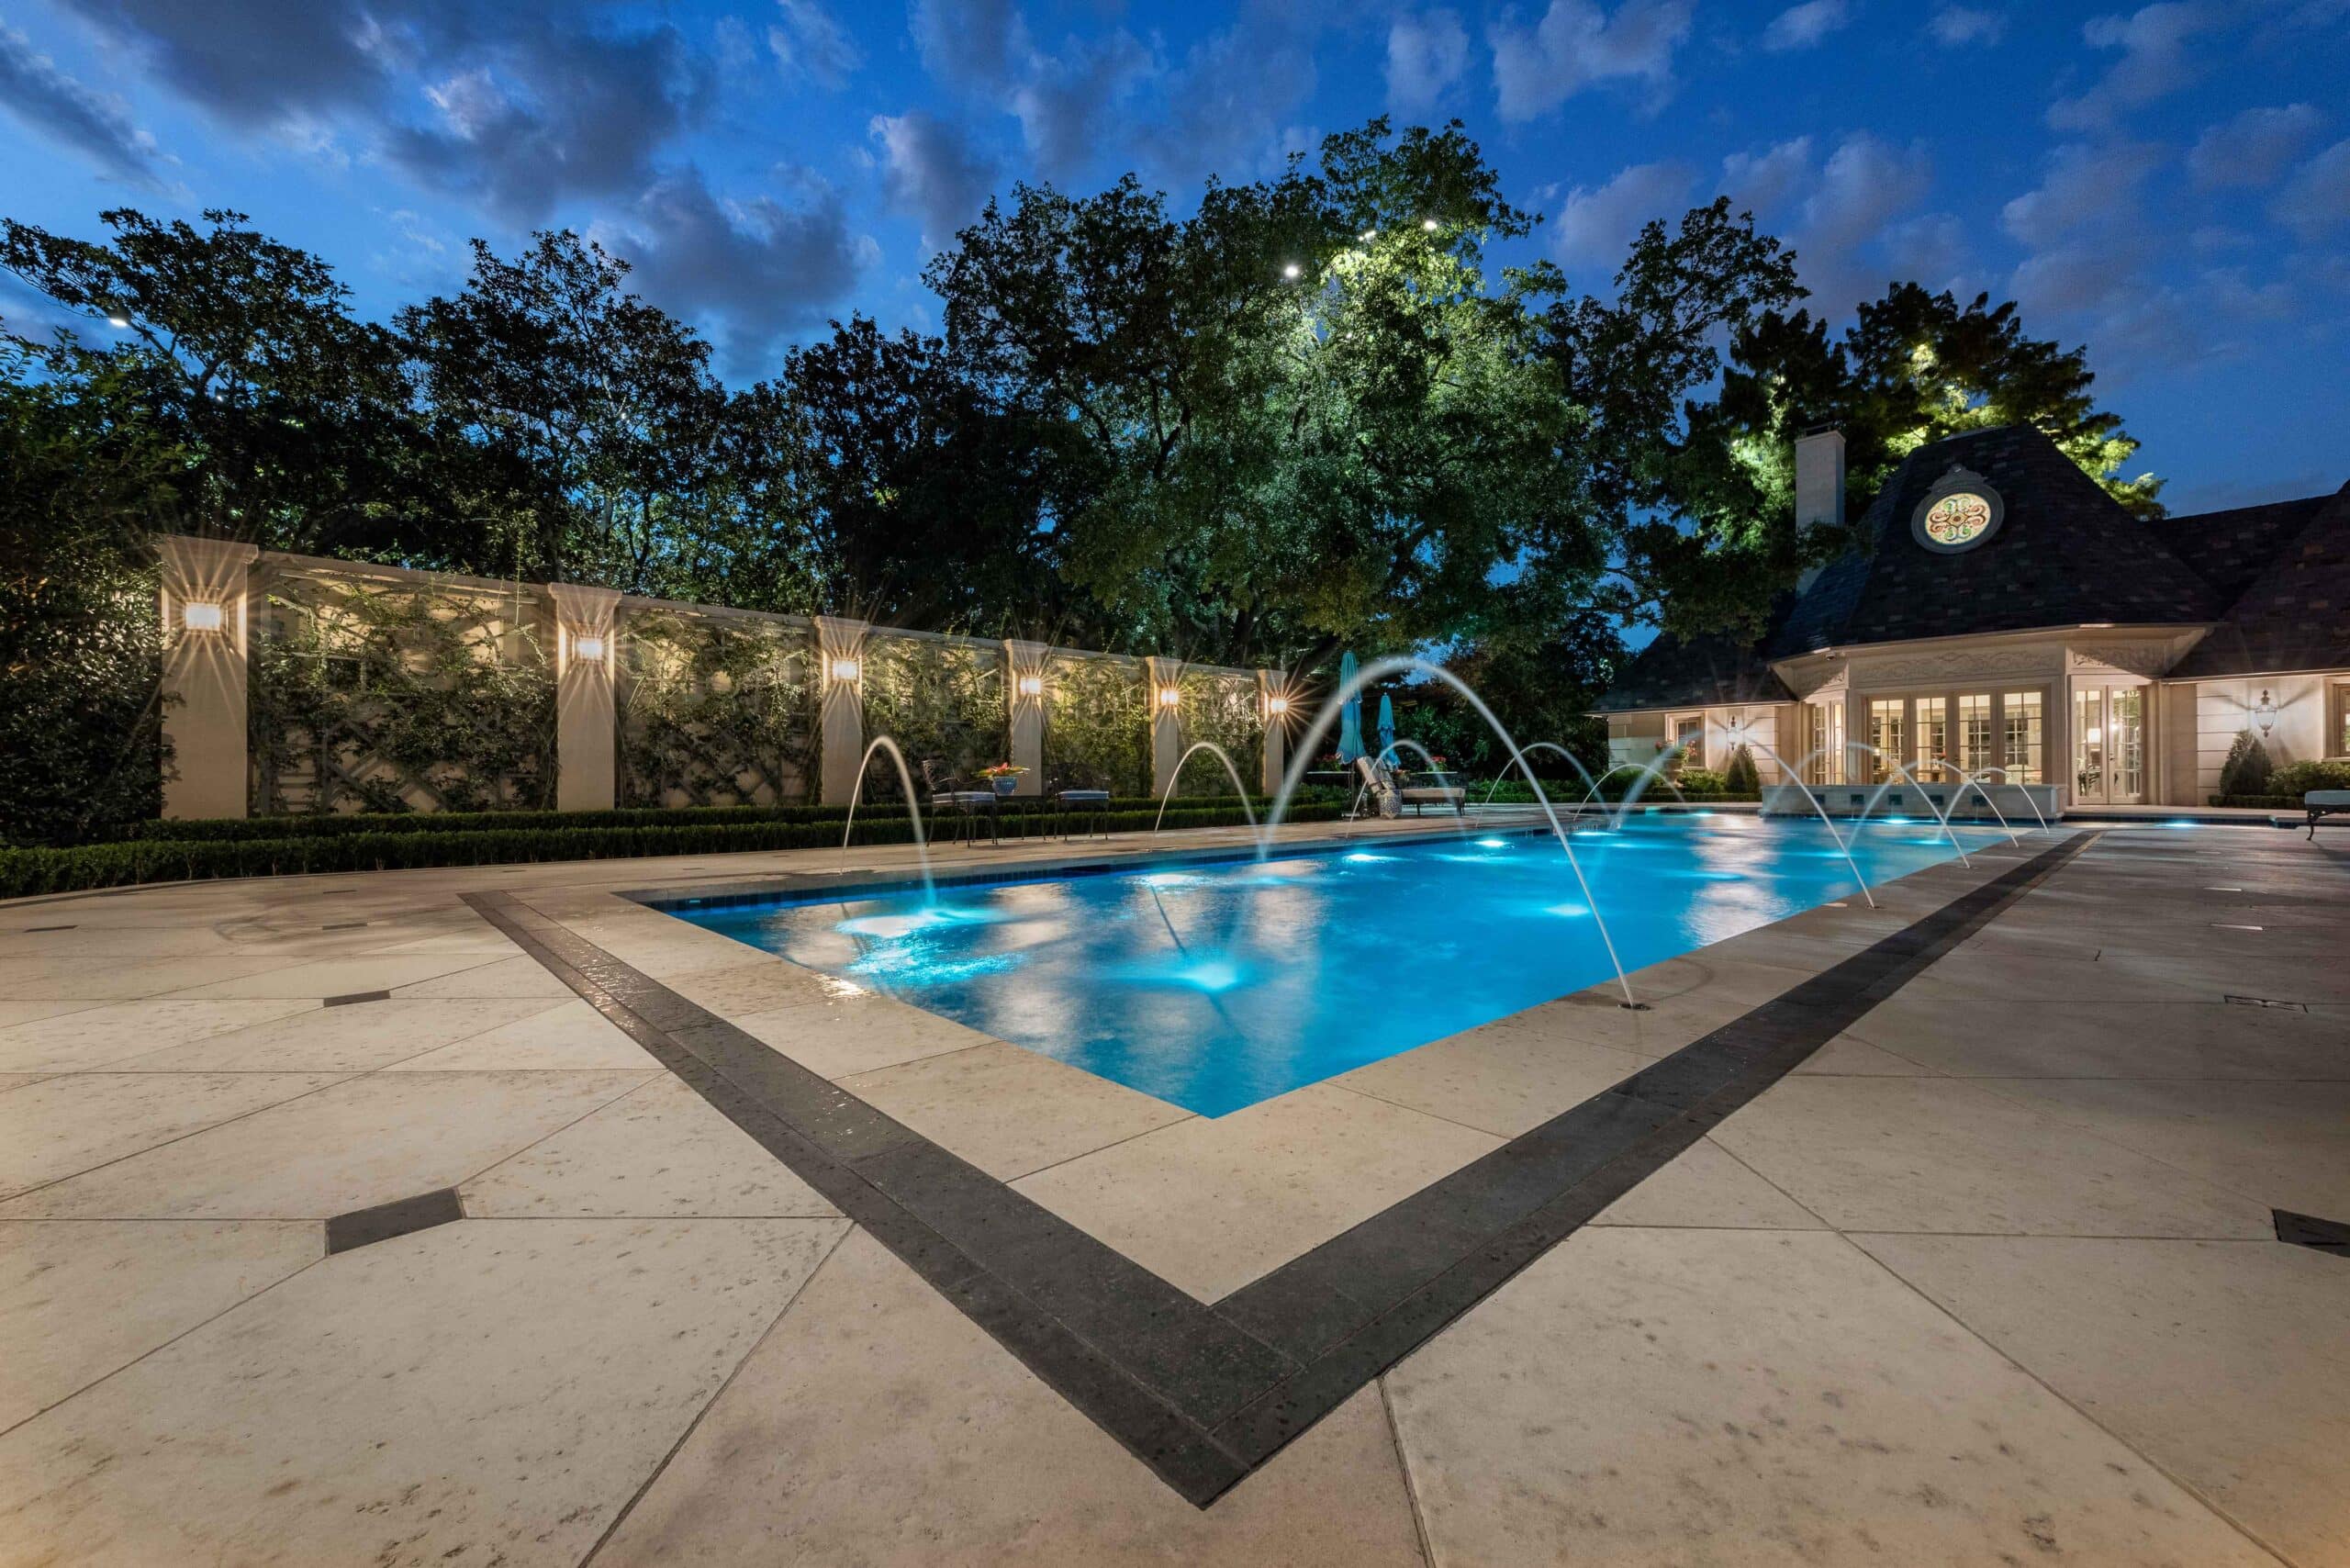 Jourdan way swimming pool design - Harold Leidner Landscape Architects